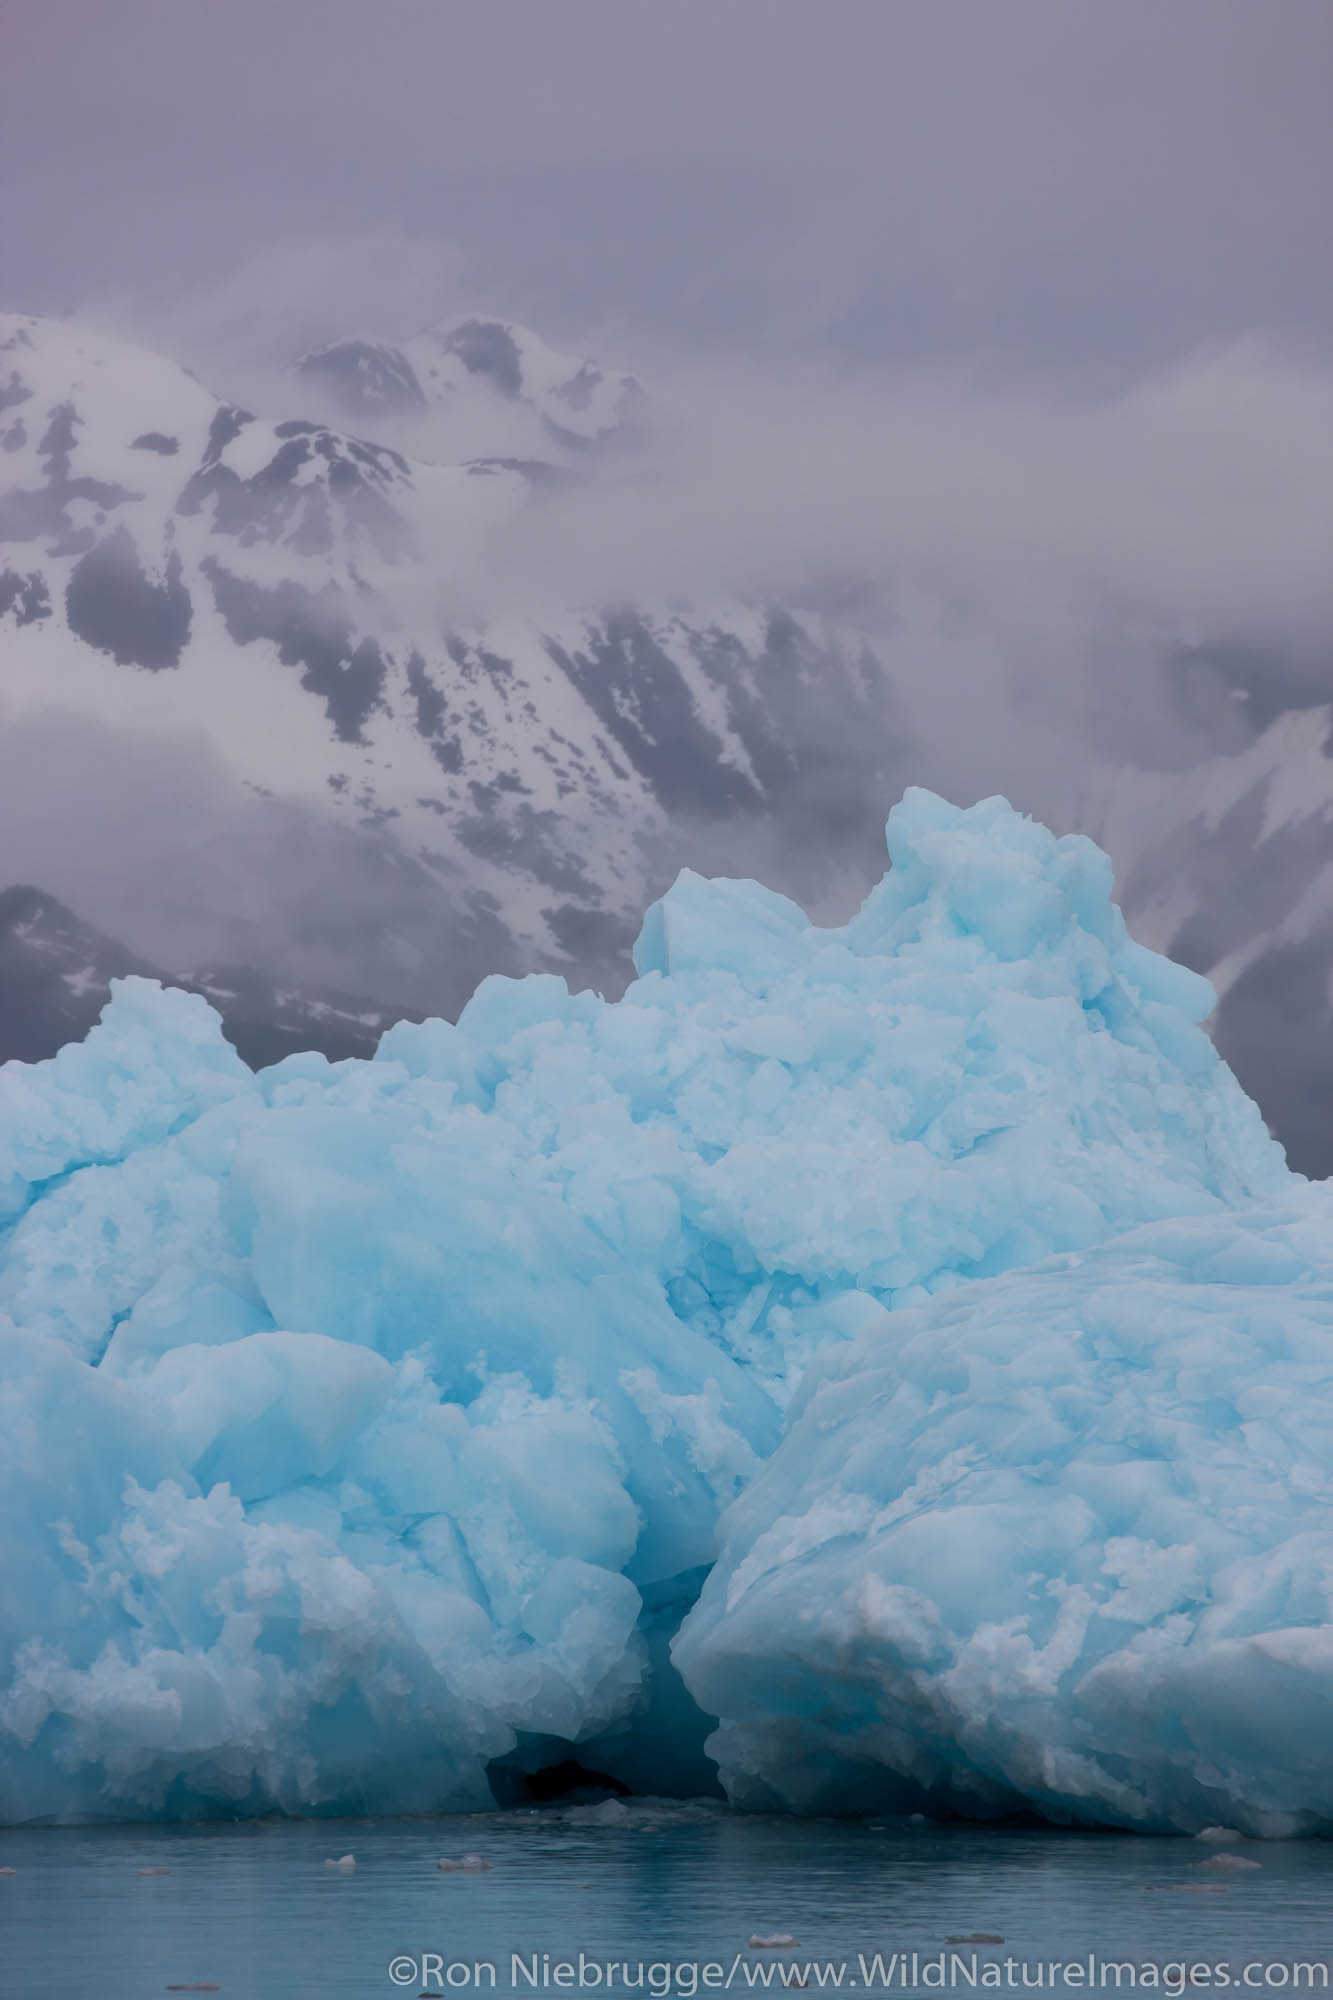 Aialik Glacier, Kenai Fjords National Park, near Seward, Alaska.